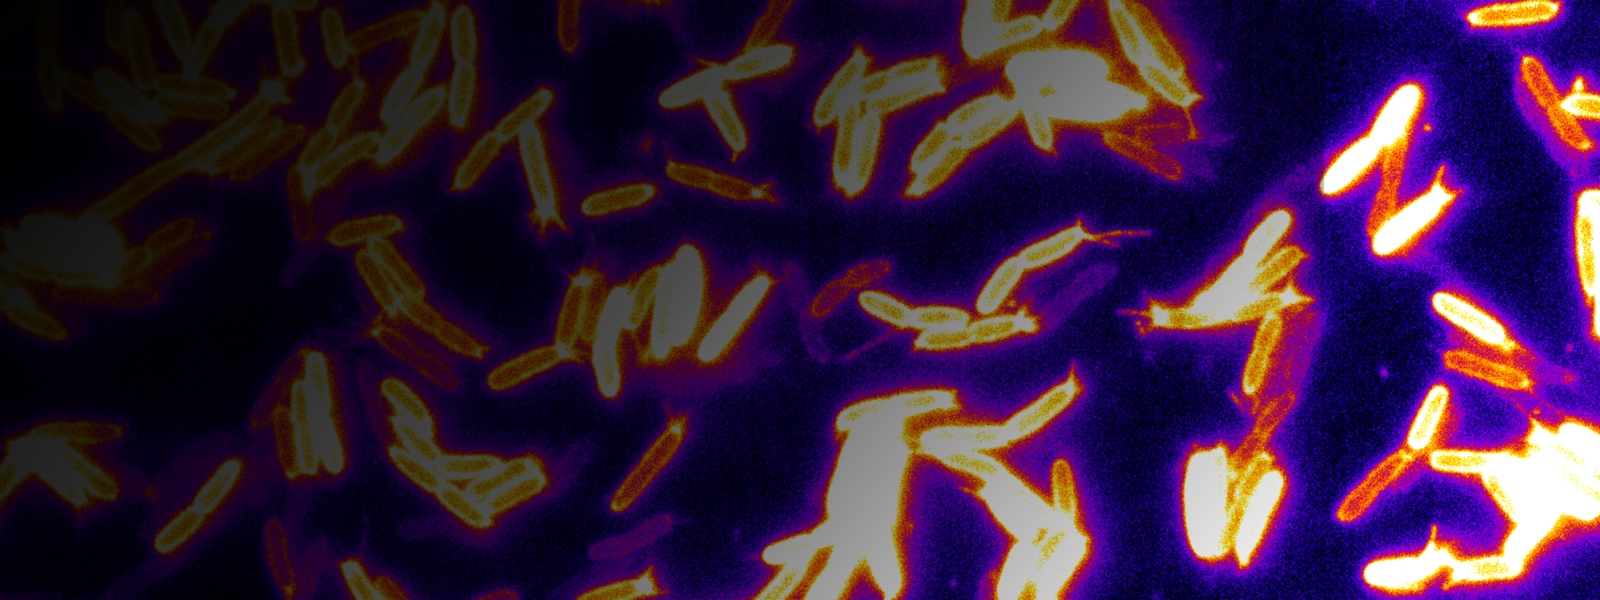 photo of neon bacteria on purple background